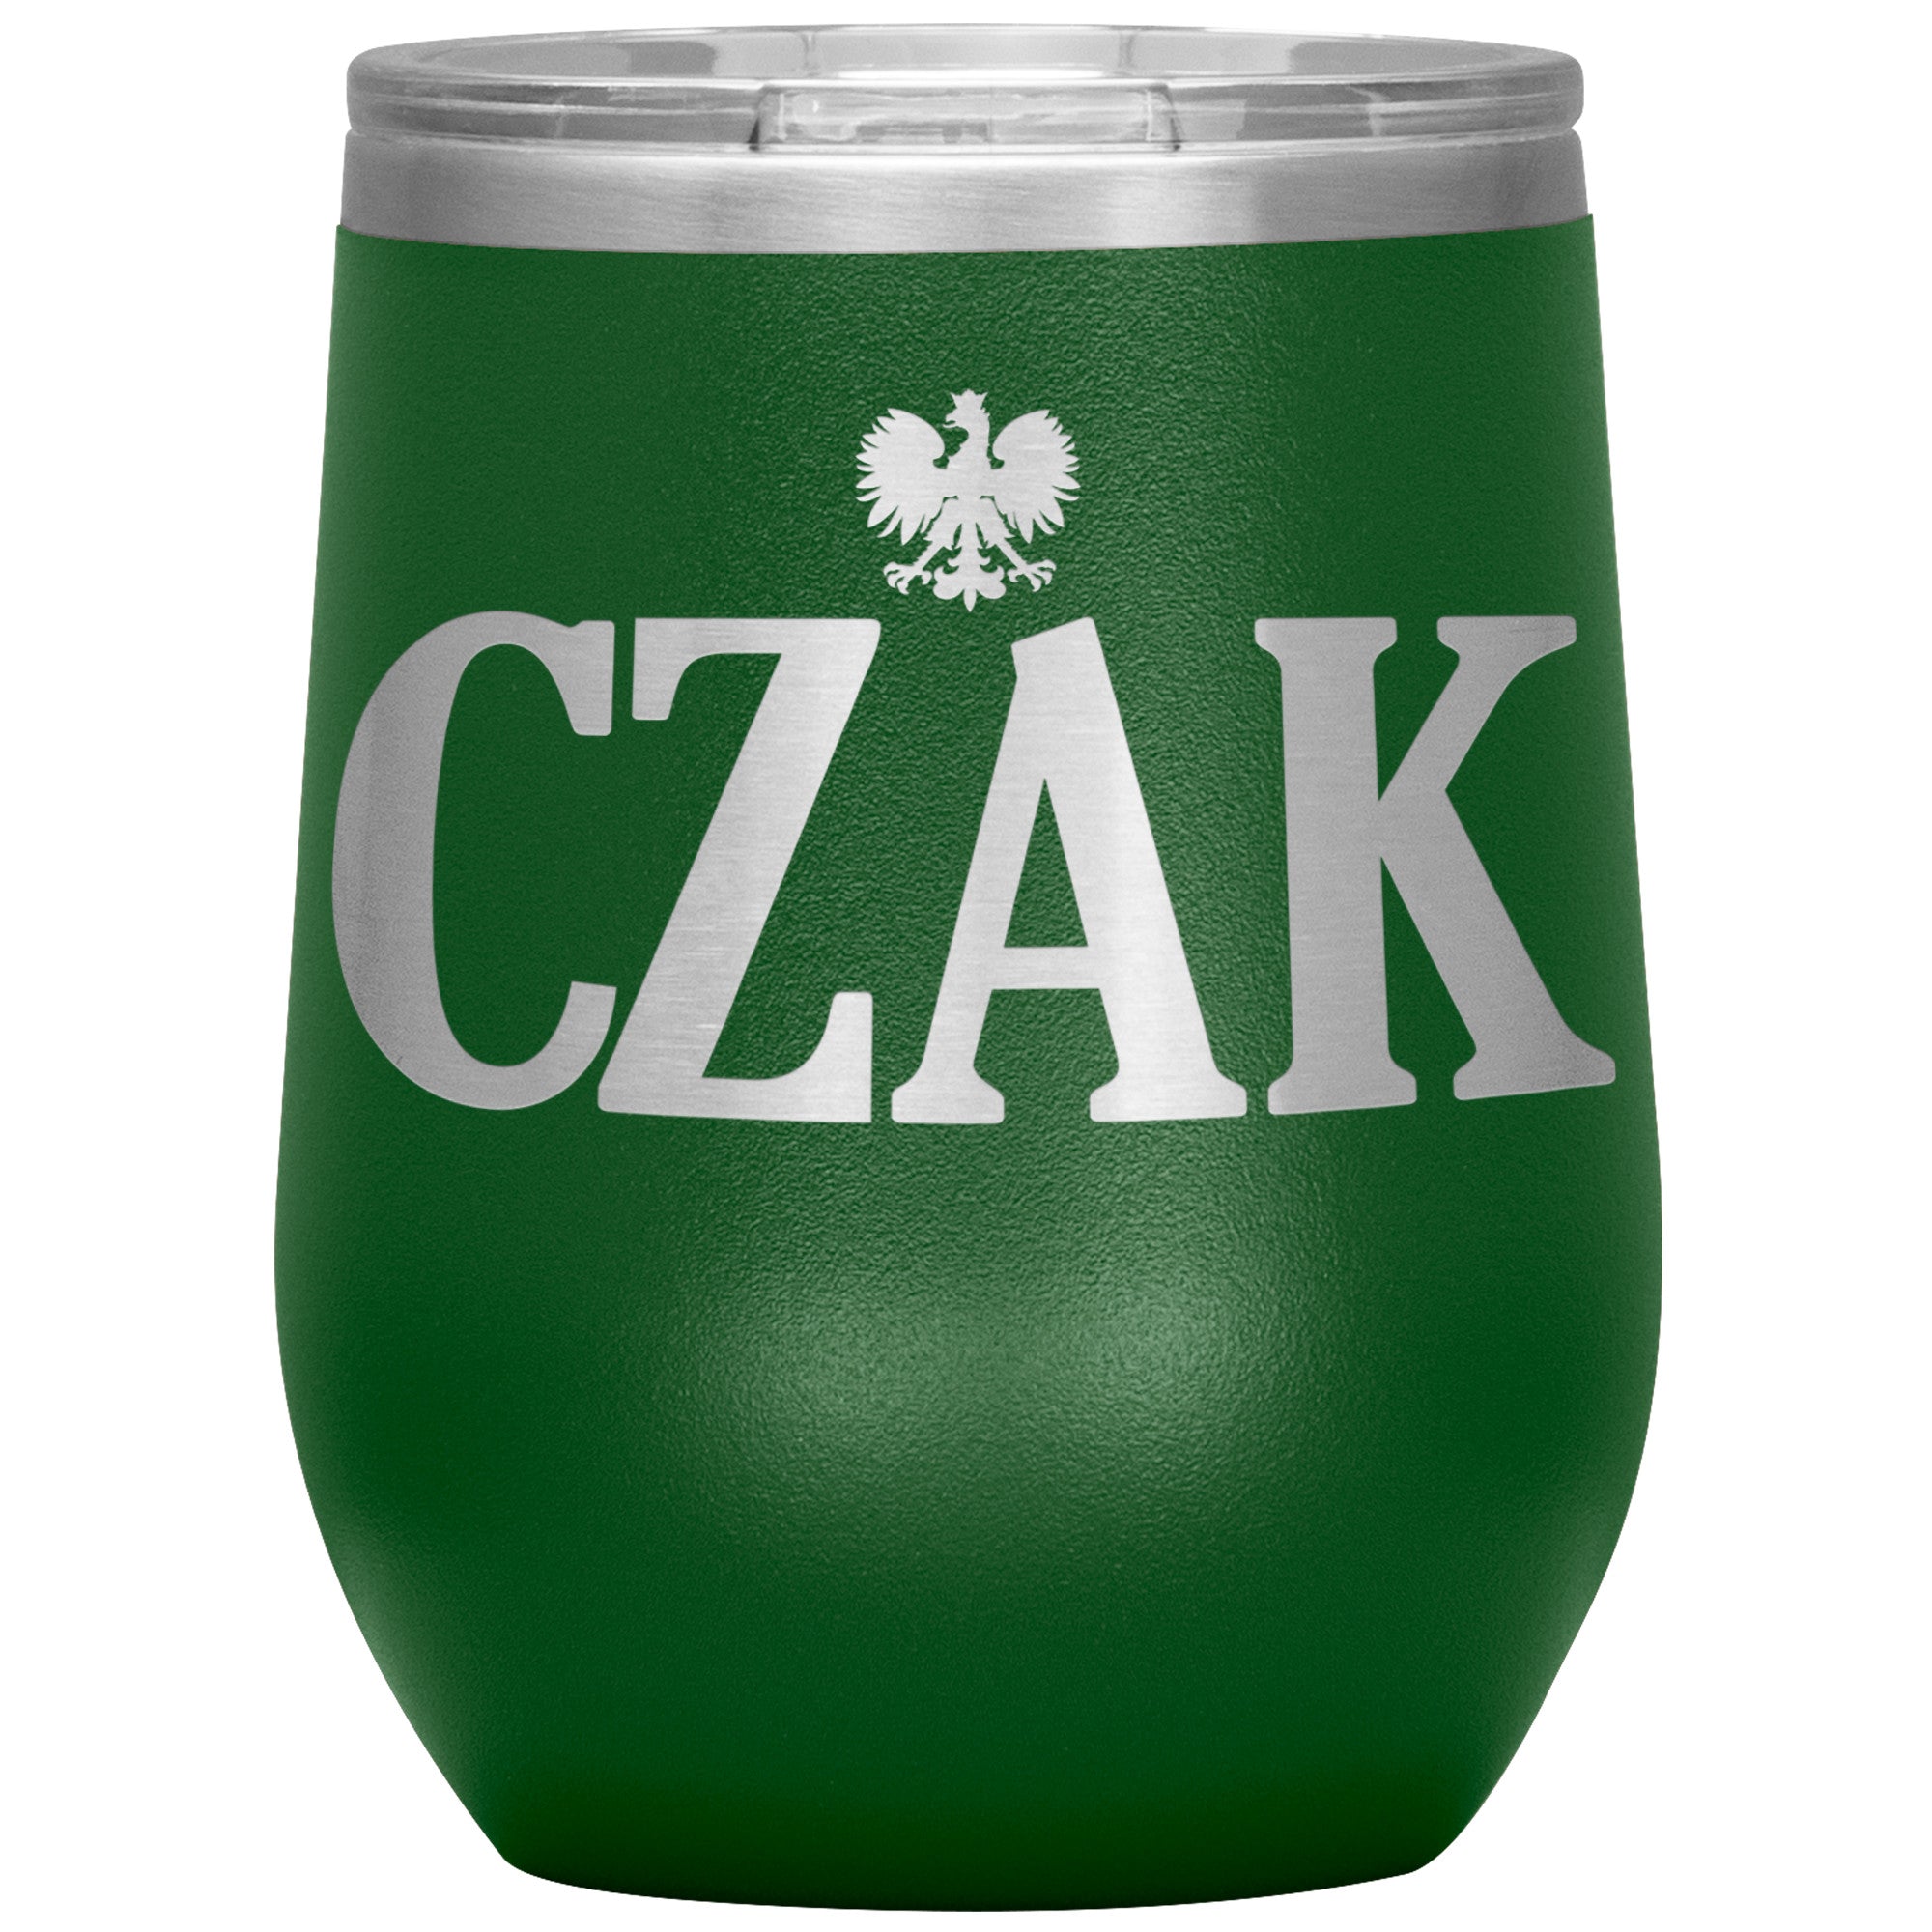 Polish Surnames Ending In CZAK Insulated Wine Tumbler Tumblers teelaunch Green  